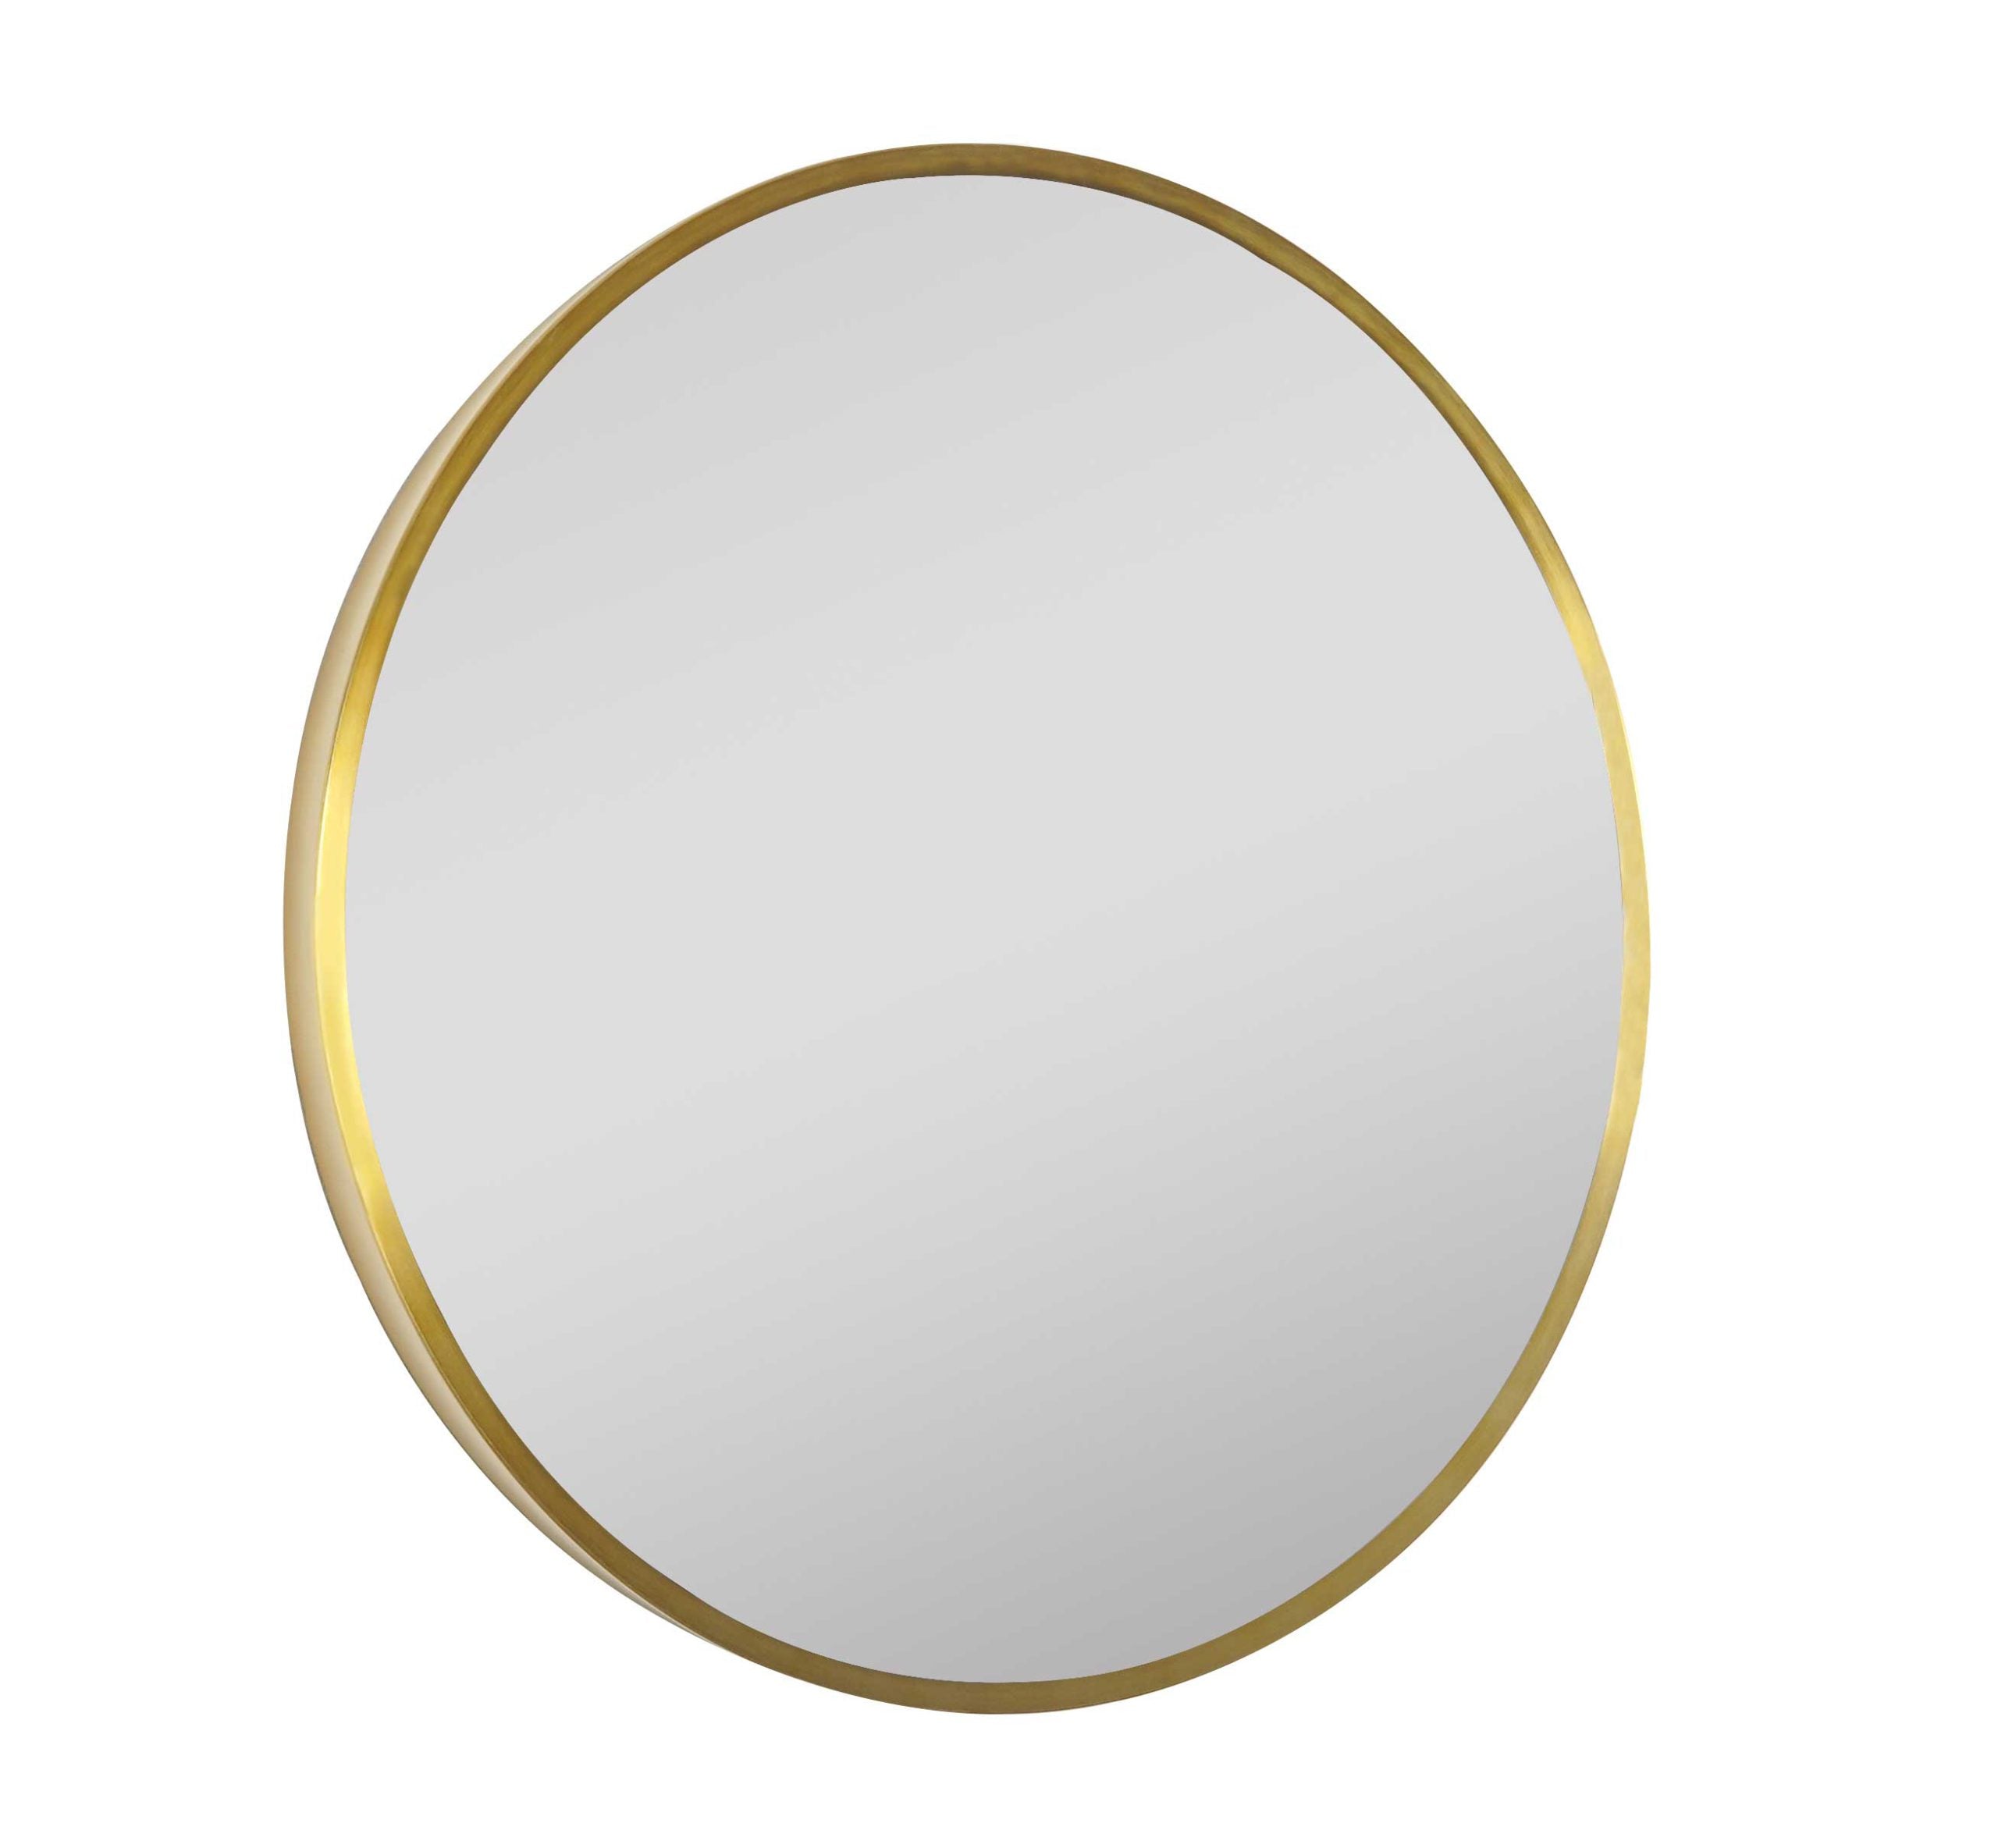 Elegant Gold Mirror Without Light